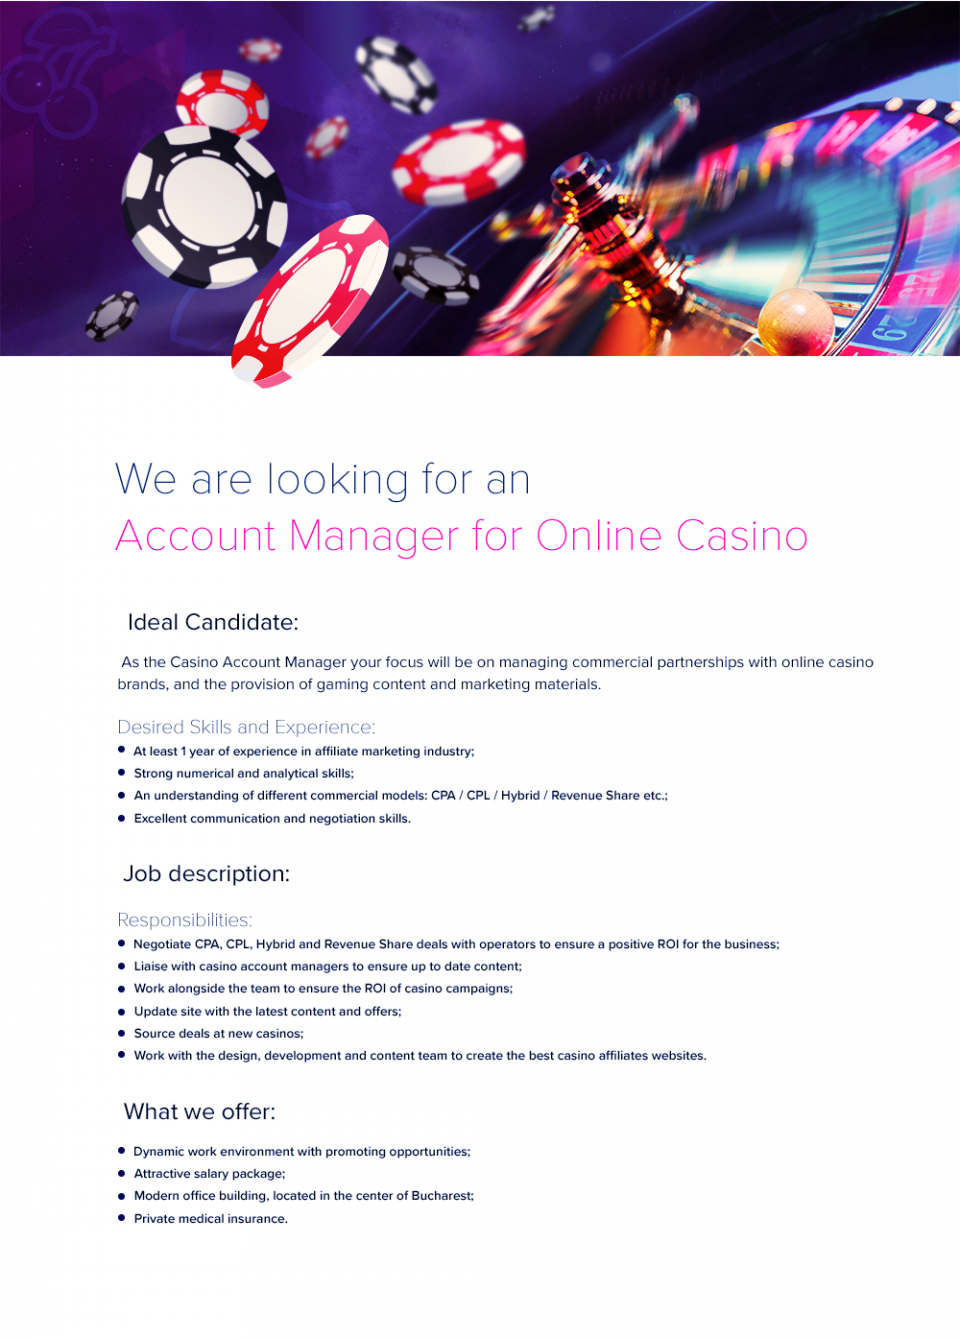 Online casino customer service job description duties